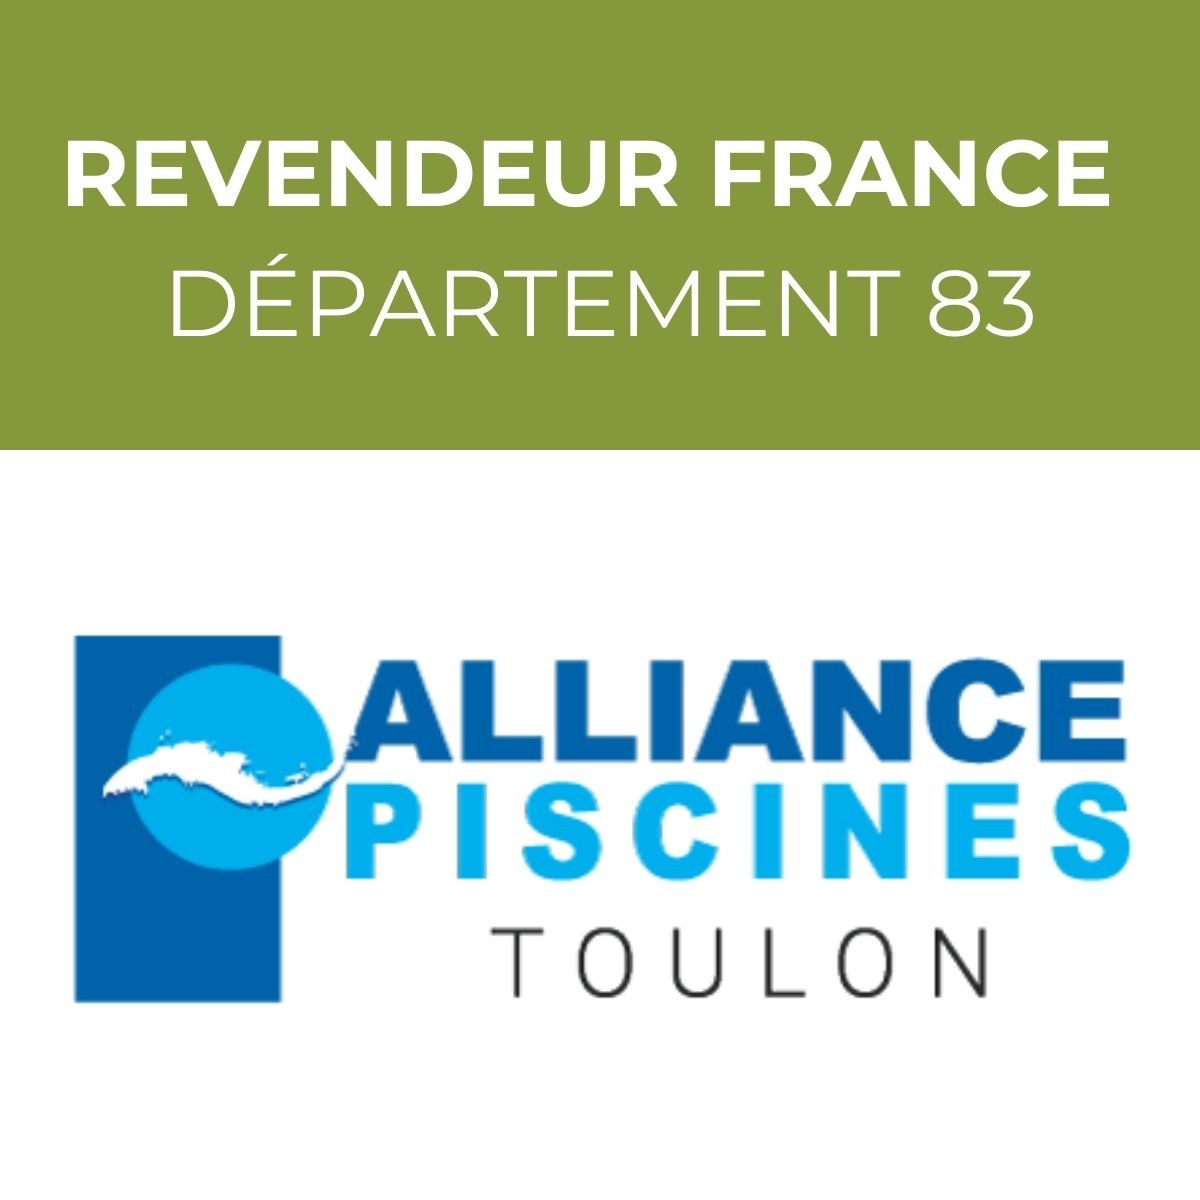 Alliance Piscines Toulon